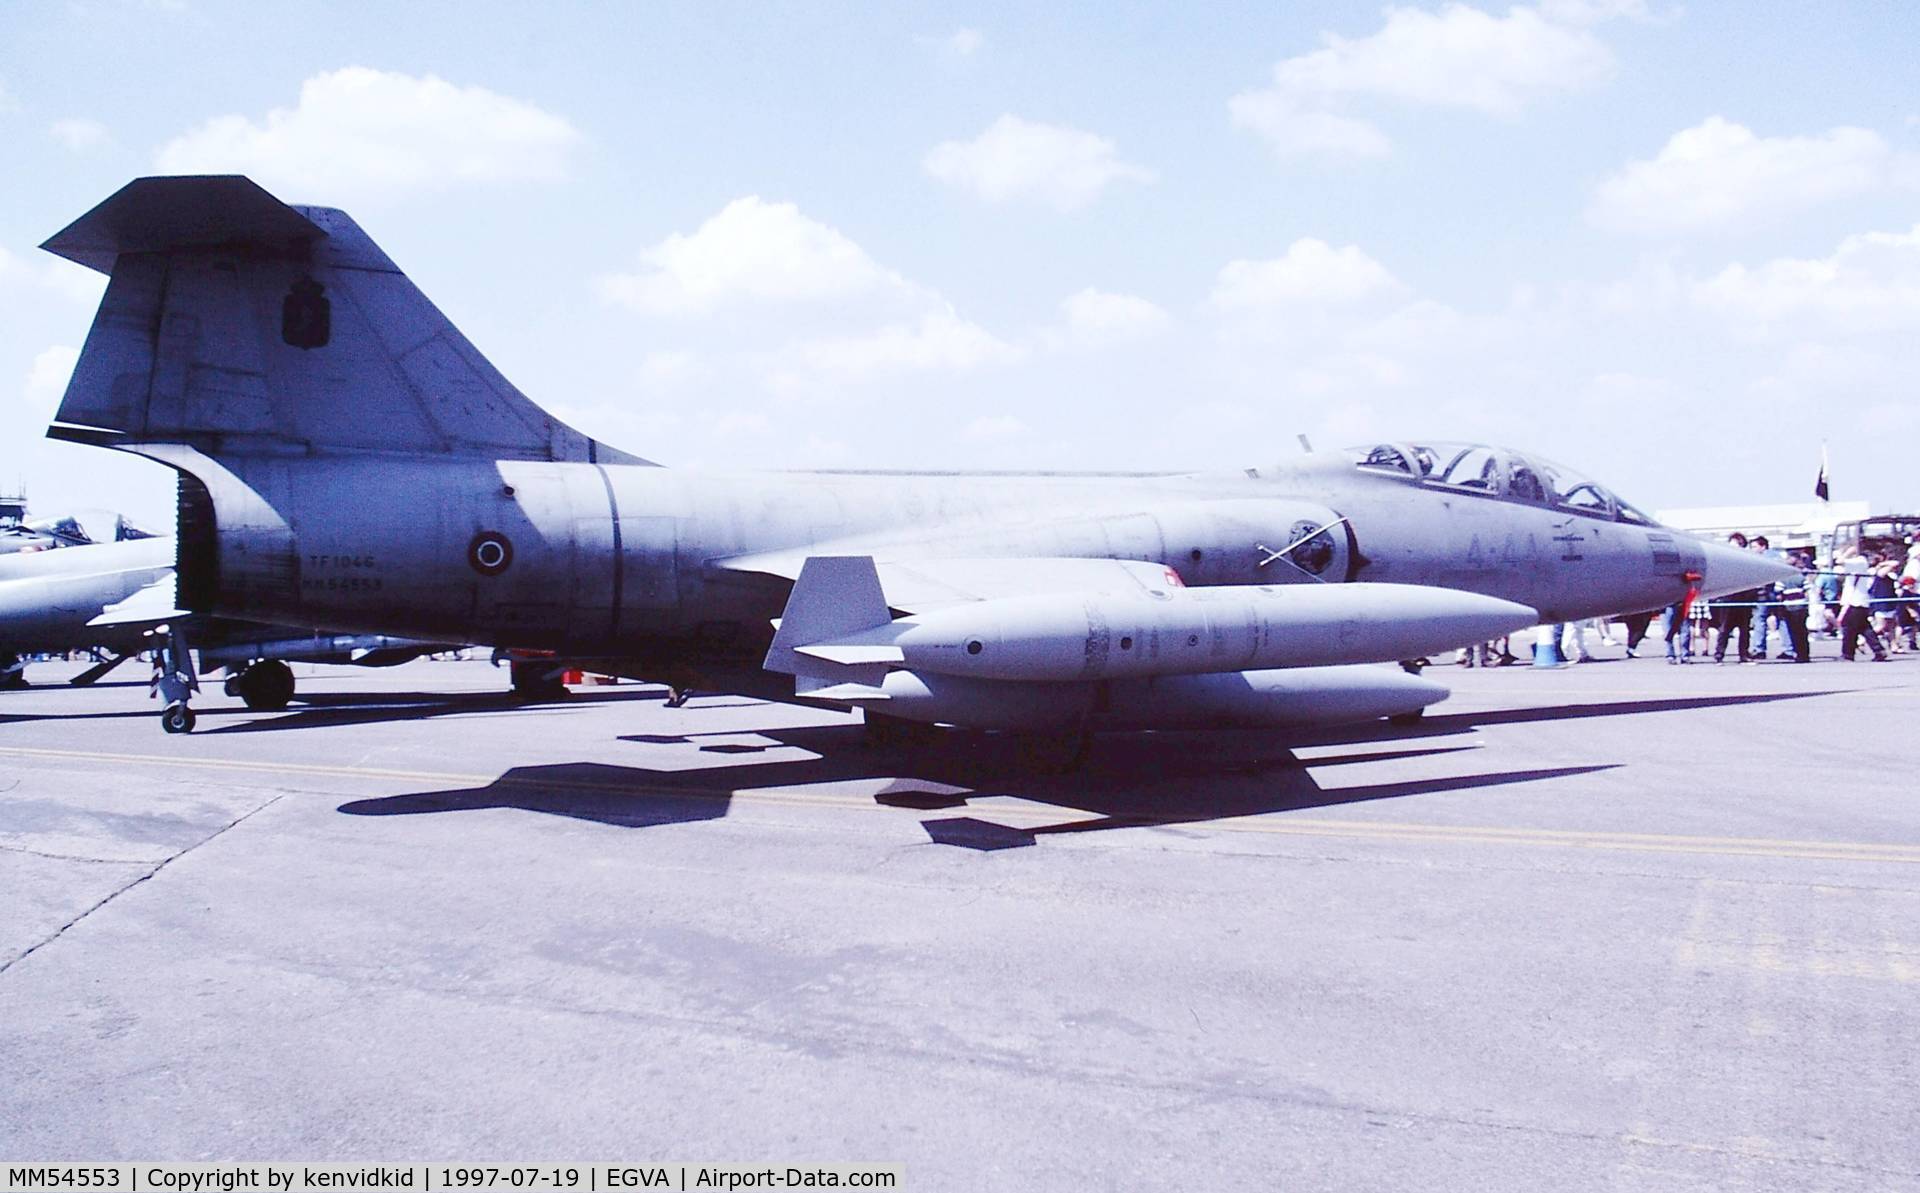 MM54553, 1961 Lockheed TF-104G Starfighter C/N 583D-5712, At the 1997 Royal International Air Tattoo.